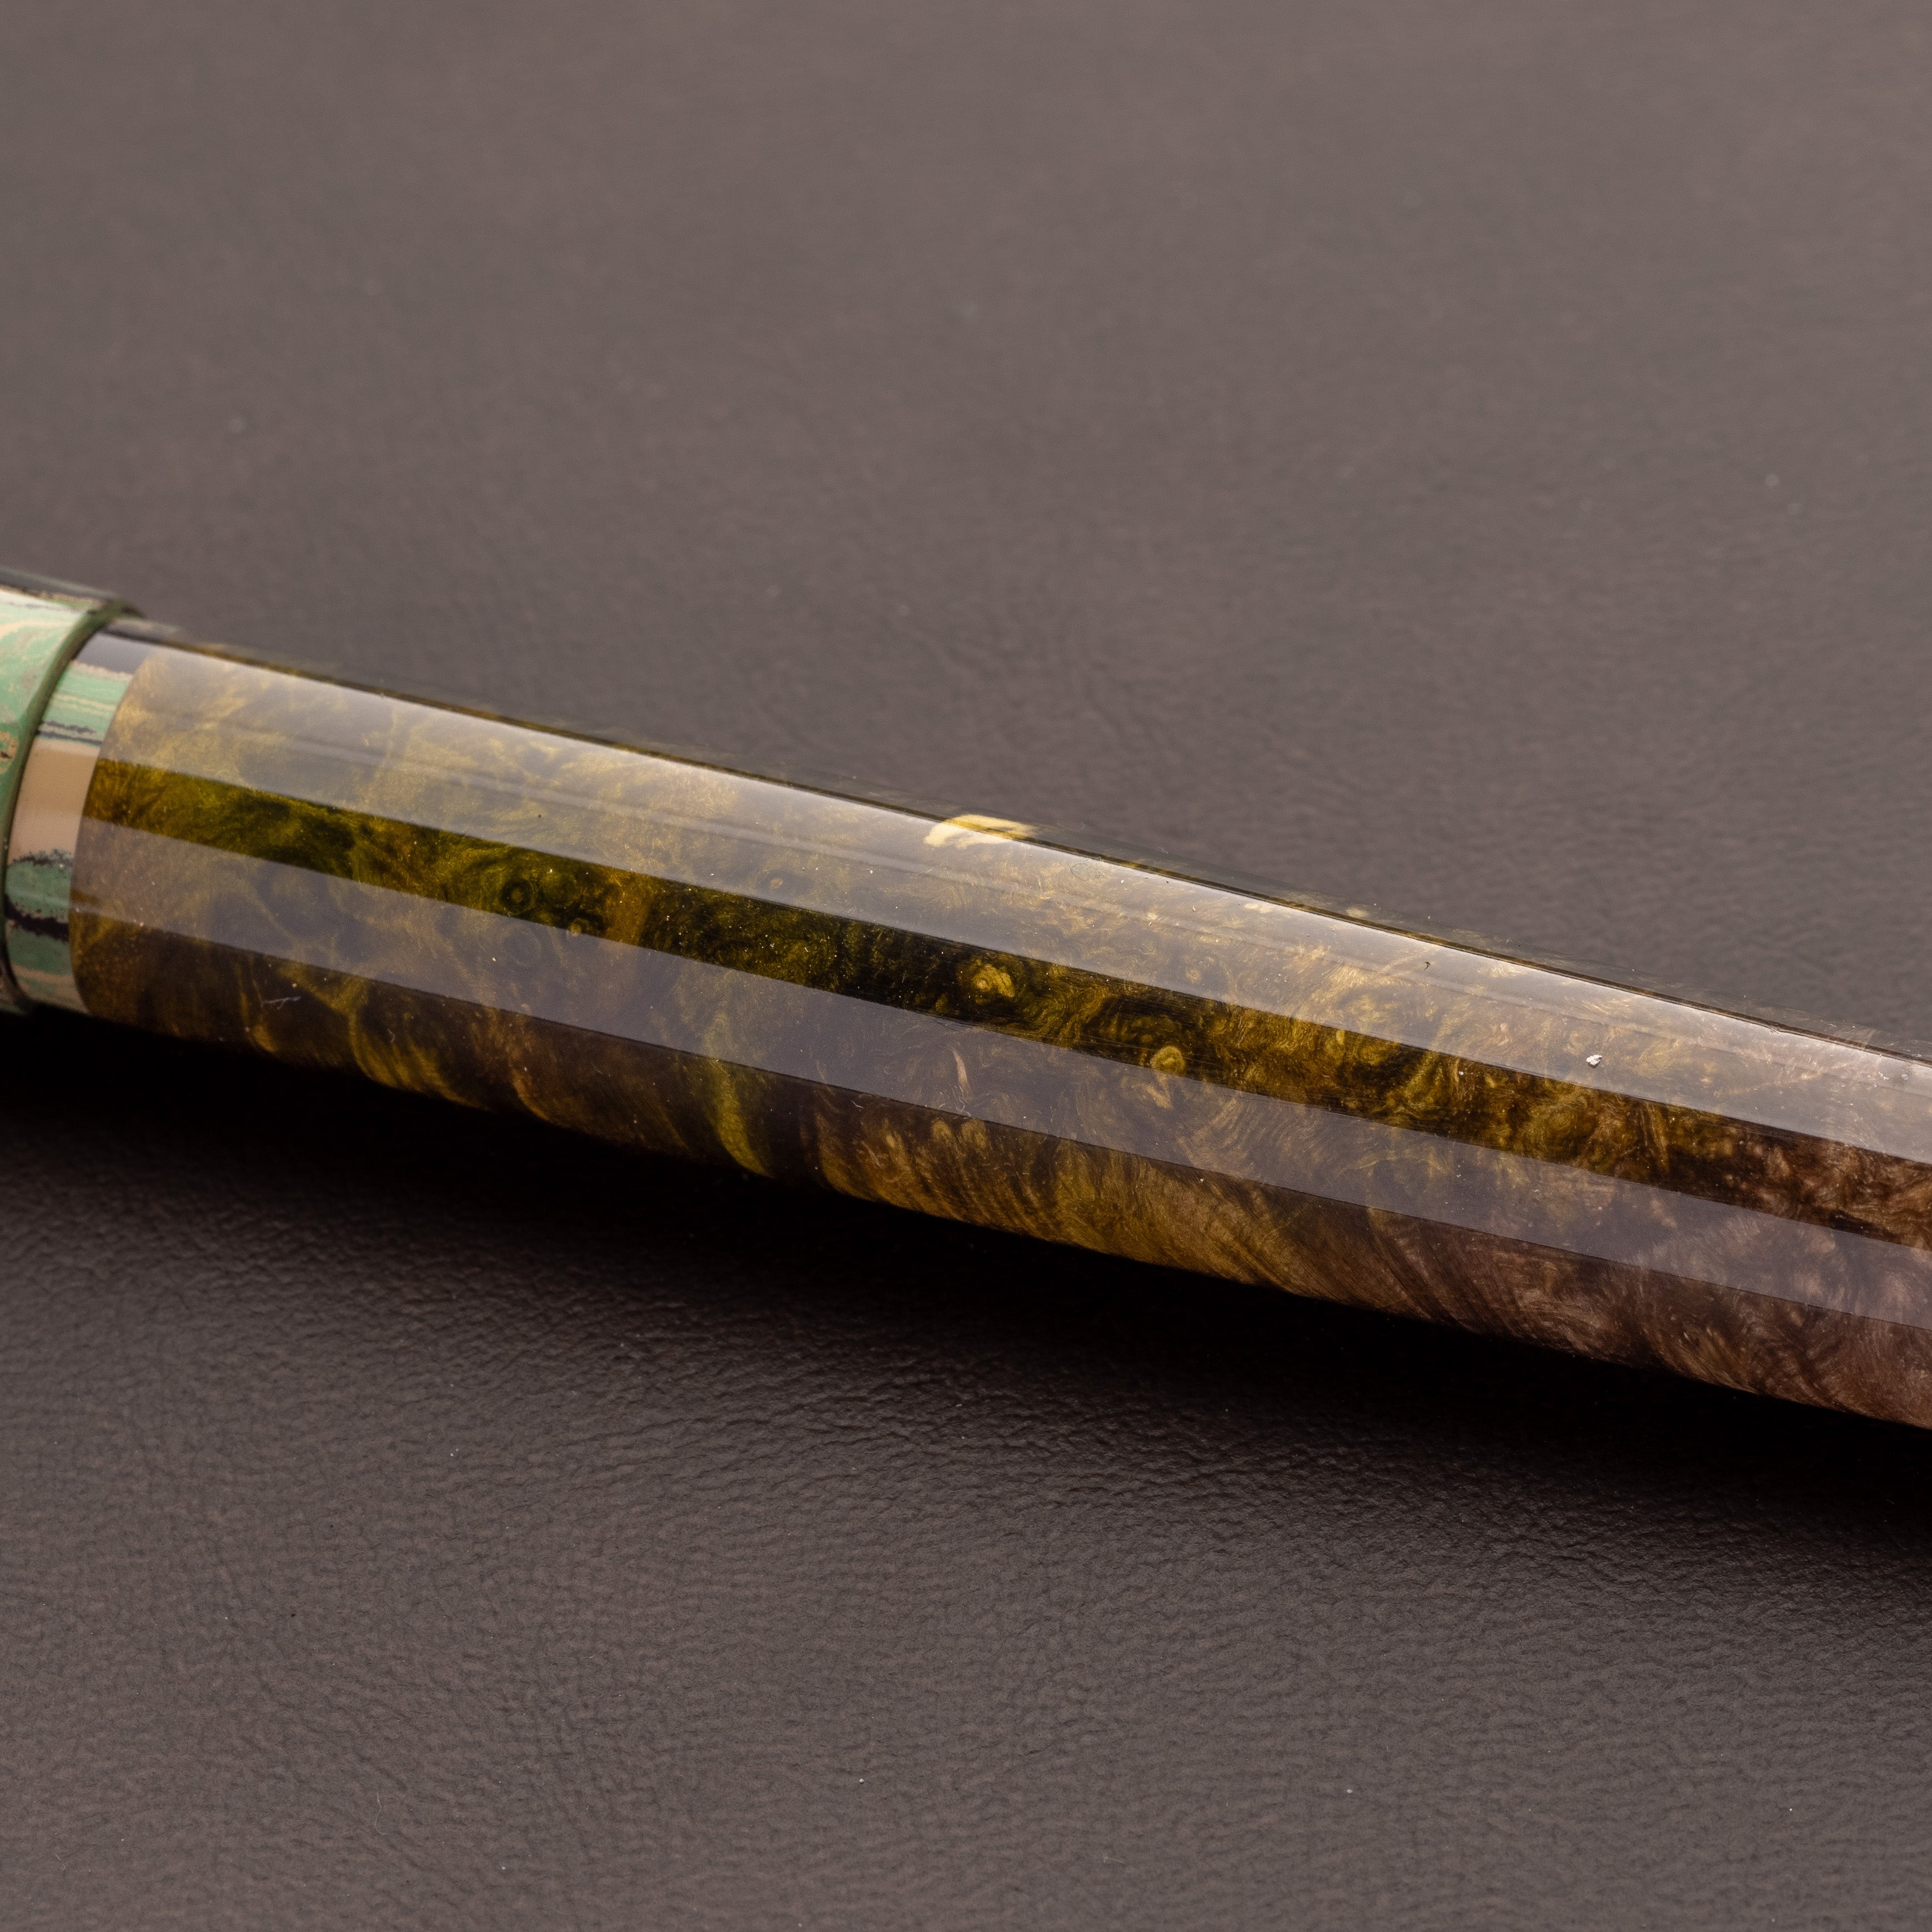 Fountain Pen - Bock #6 - 14 mm - Green Maple Burl and SEM Ebonite